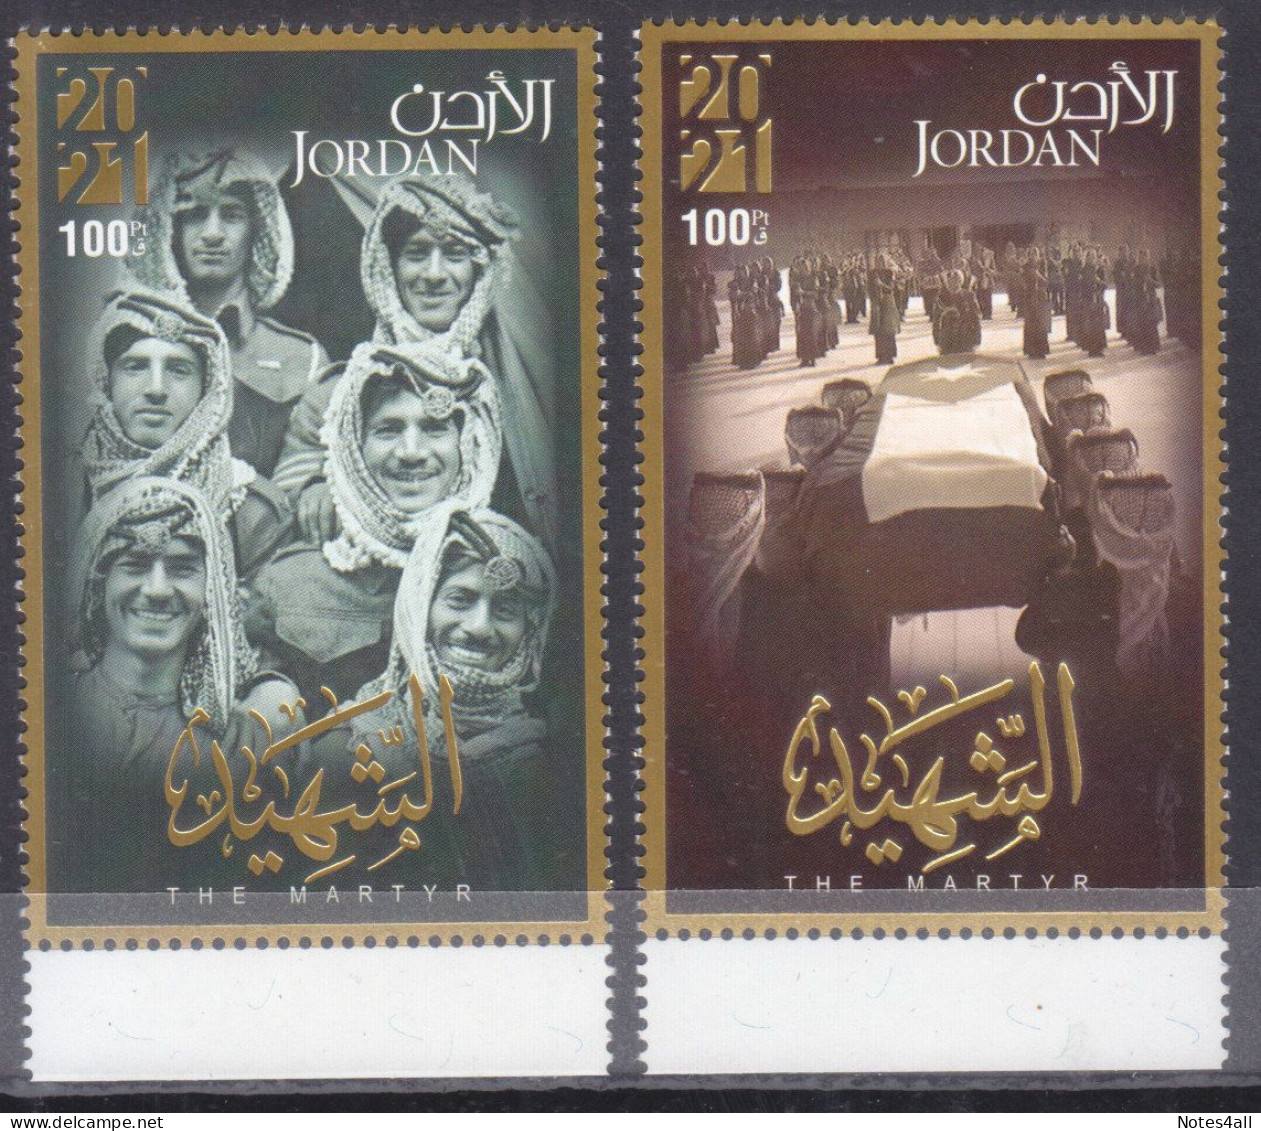 Stamps Jordan 2021 Martyr MNH #62 - Jordanien